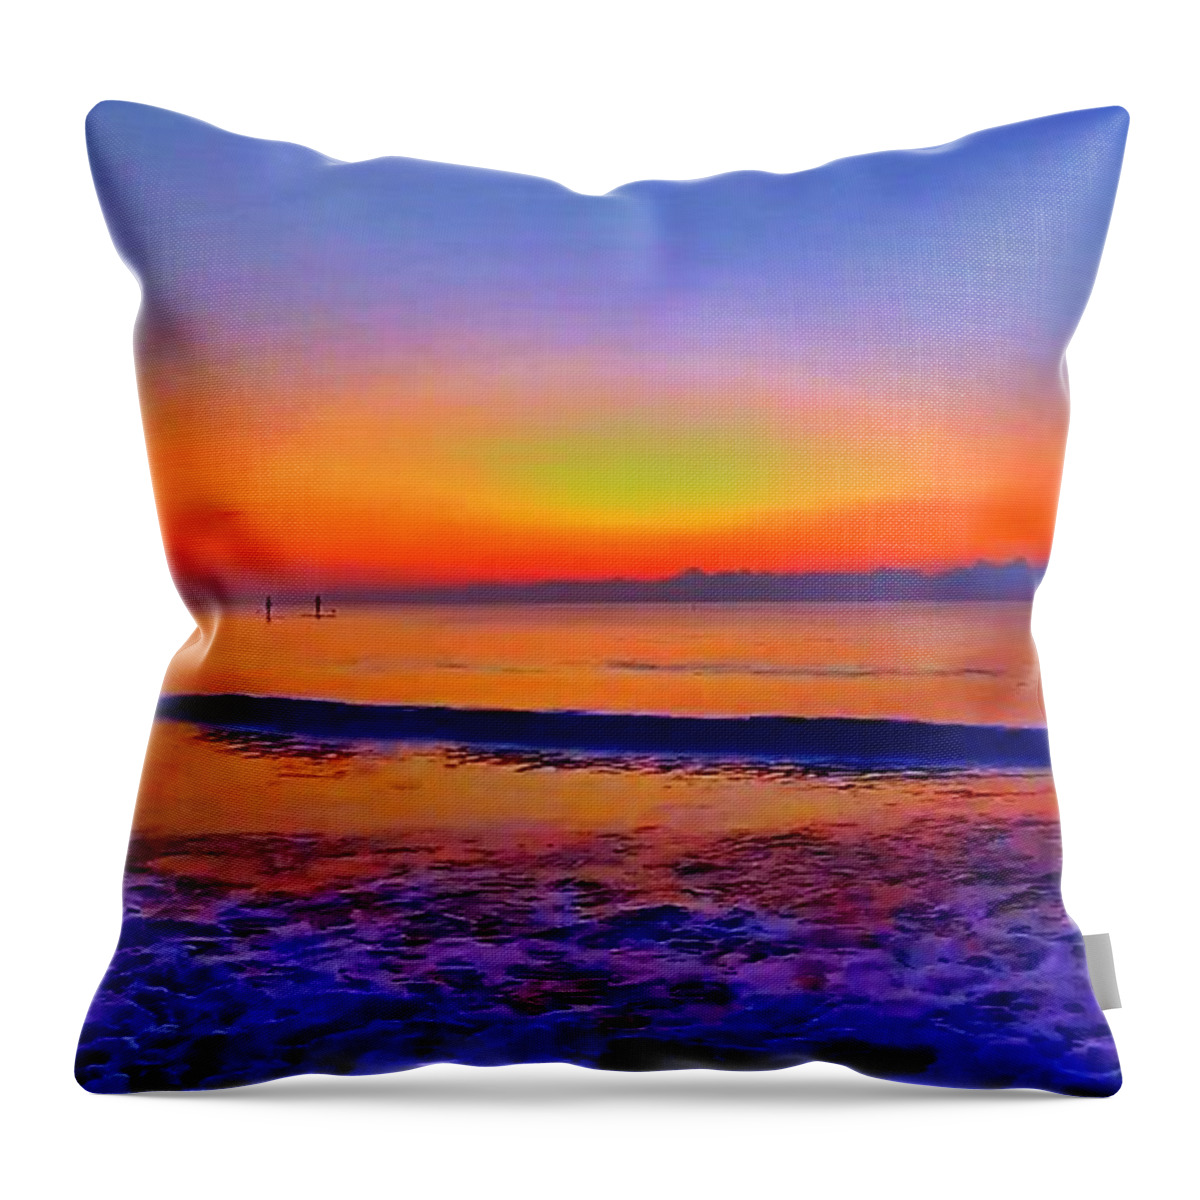 Sunrise Throw Pillow featuring the photograph Sunrise Beach 256 by Rip Read